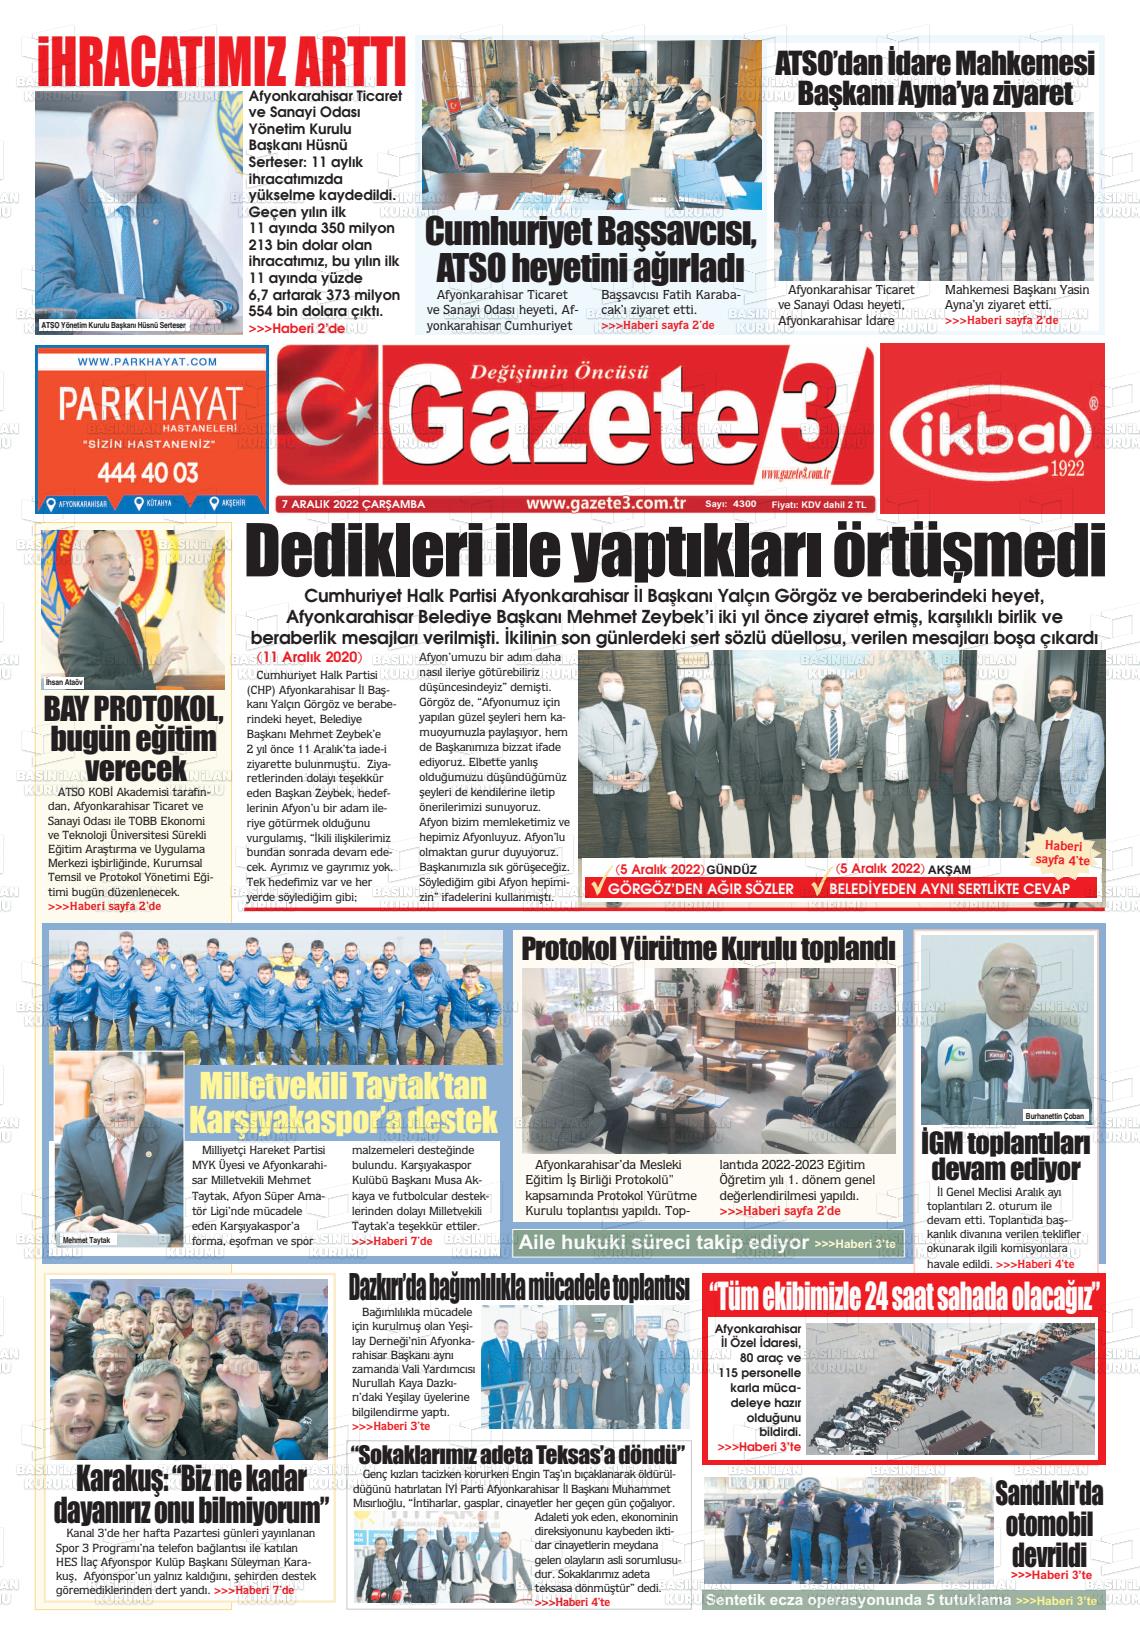 07 Aralık 2022 Gazete 3 Gazete Manşeti